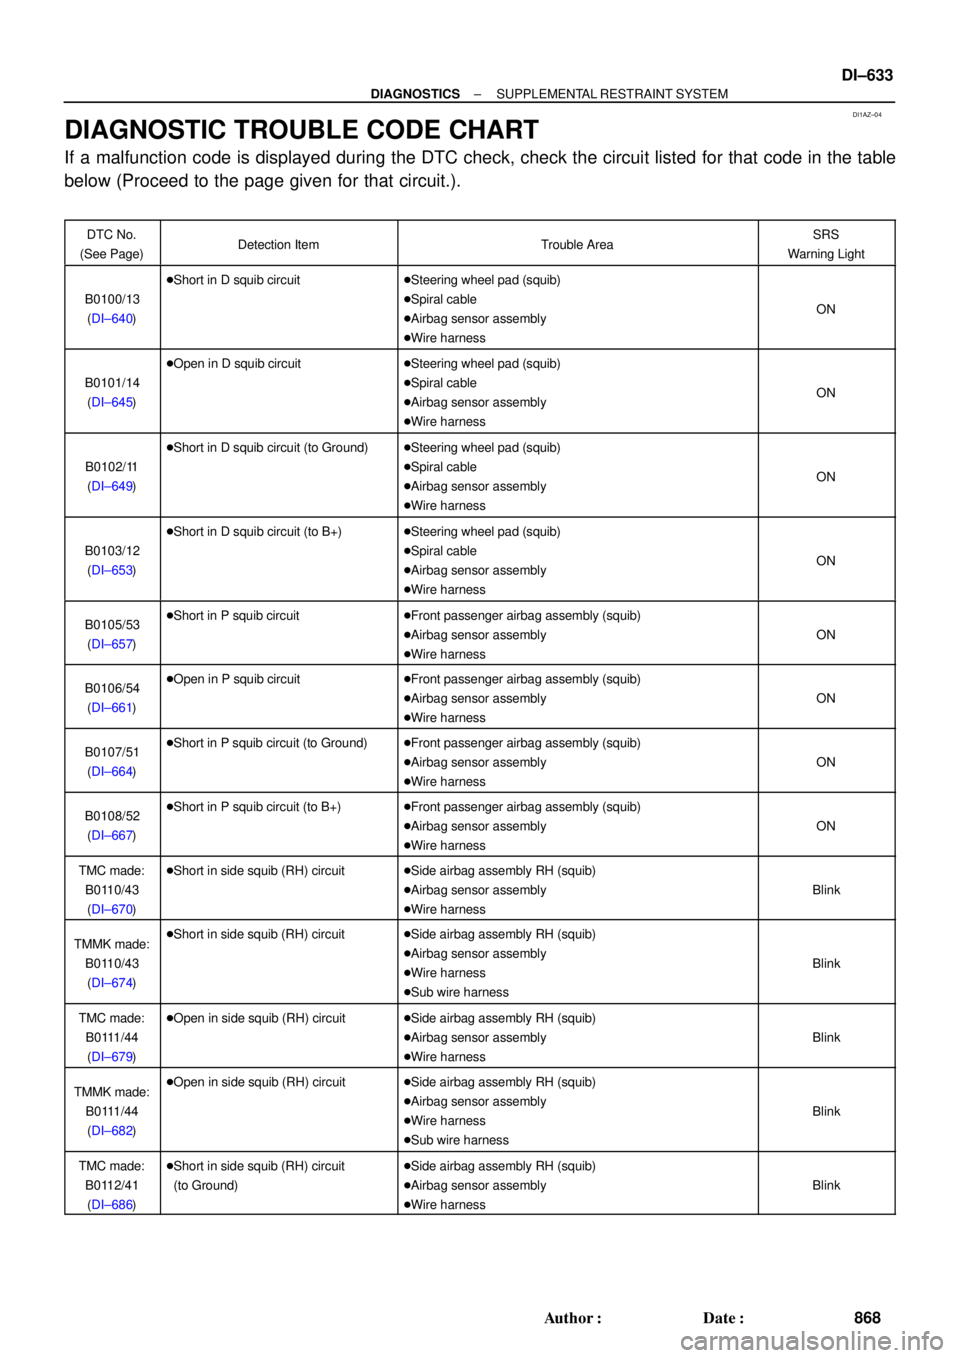 TOYOTA CAMRY 1999  Service Repair Manual DI1AZ±04
± DIAGNOSTICSSUPPLEMENTAL RESTRAINT SYSTEM
DI±633
868 Author: Date:
DIAGNOSTIC TROUBLE CODE CHART
If a malfunction code is displayed during the DTC check, check the circuit listed for th